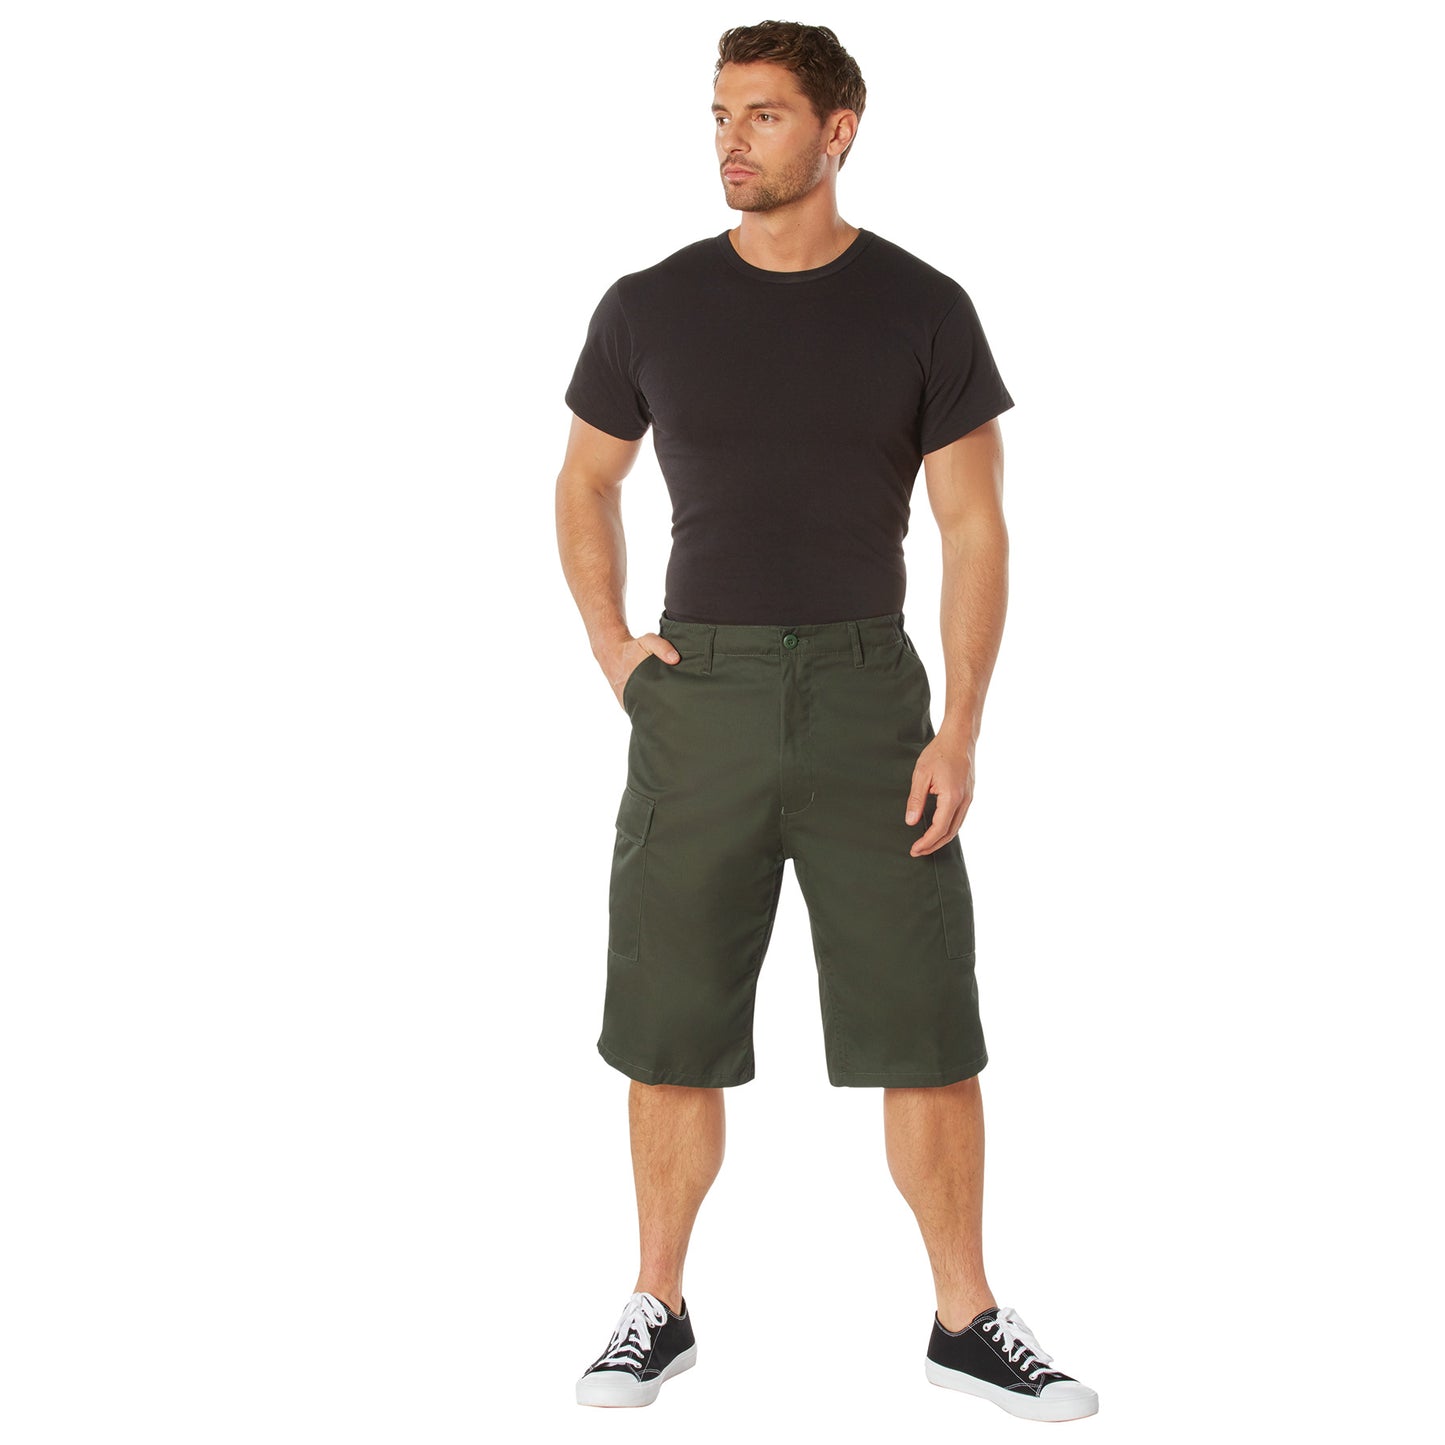 Rothco Long Length BDU Shorts